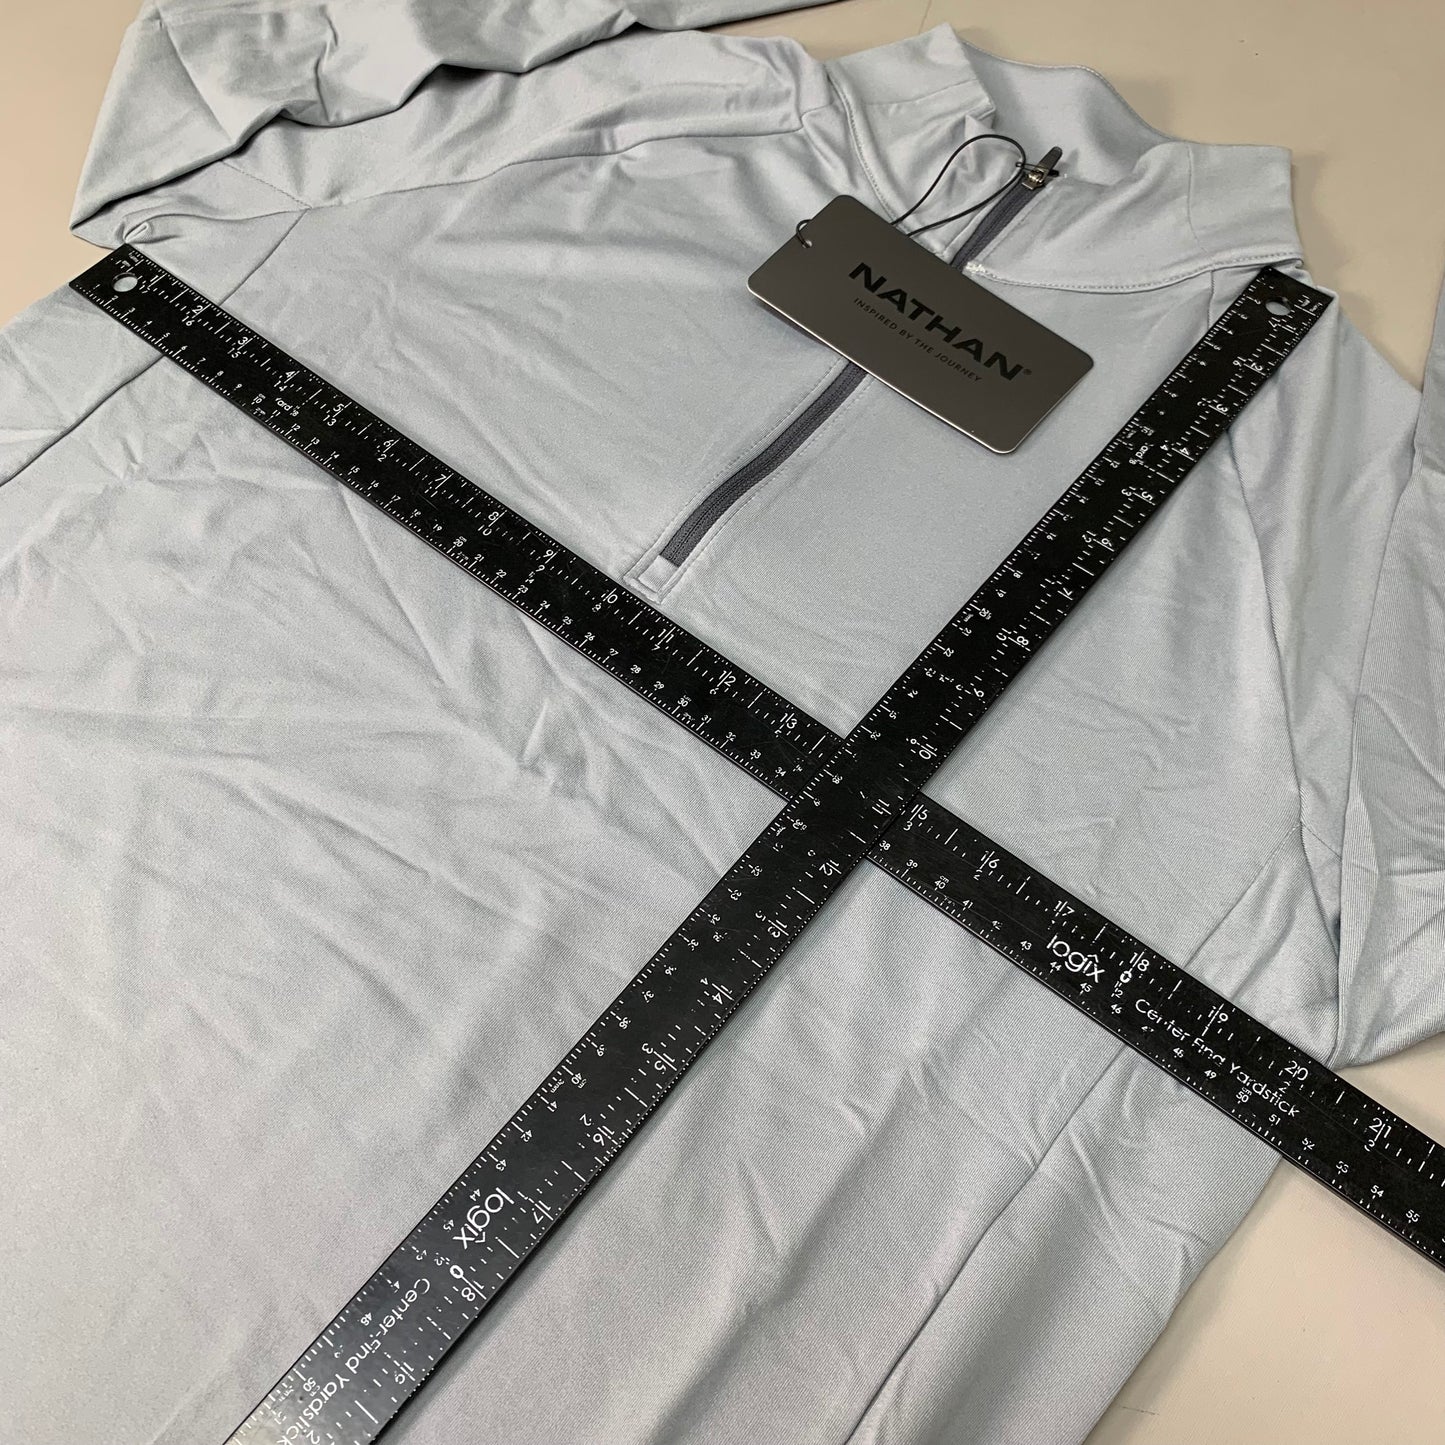 NATHAN Tempo 1/4 Zip Long Sleeve Shirt 2.0 Men's Medium Monument Gray NS50960-80128-M (New)